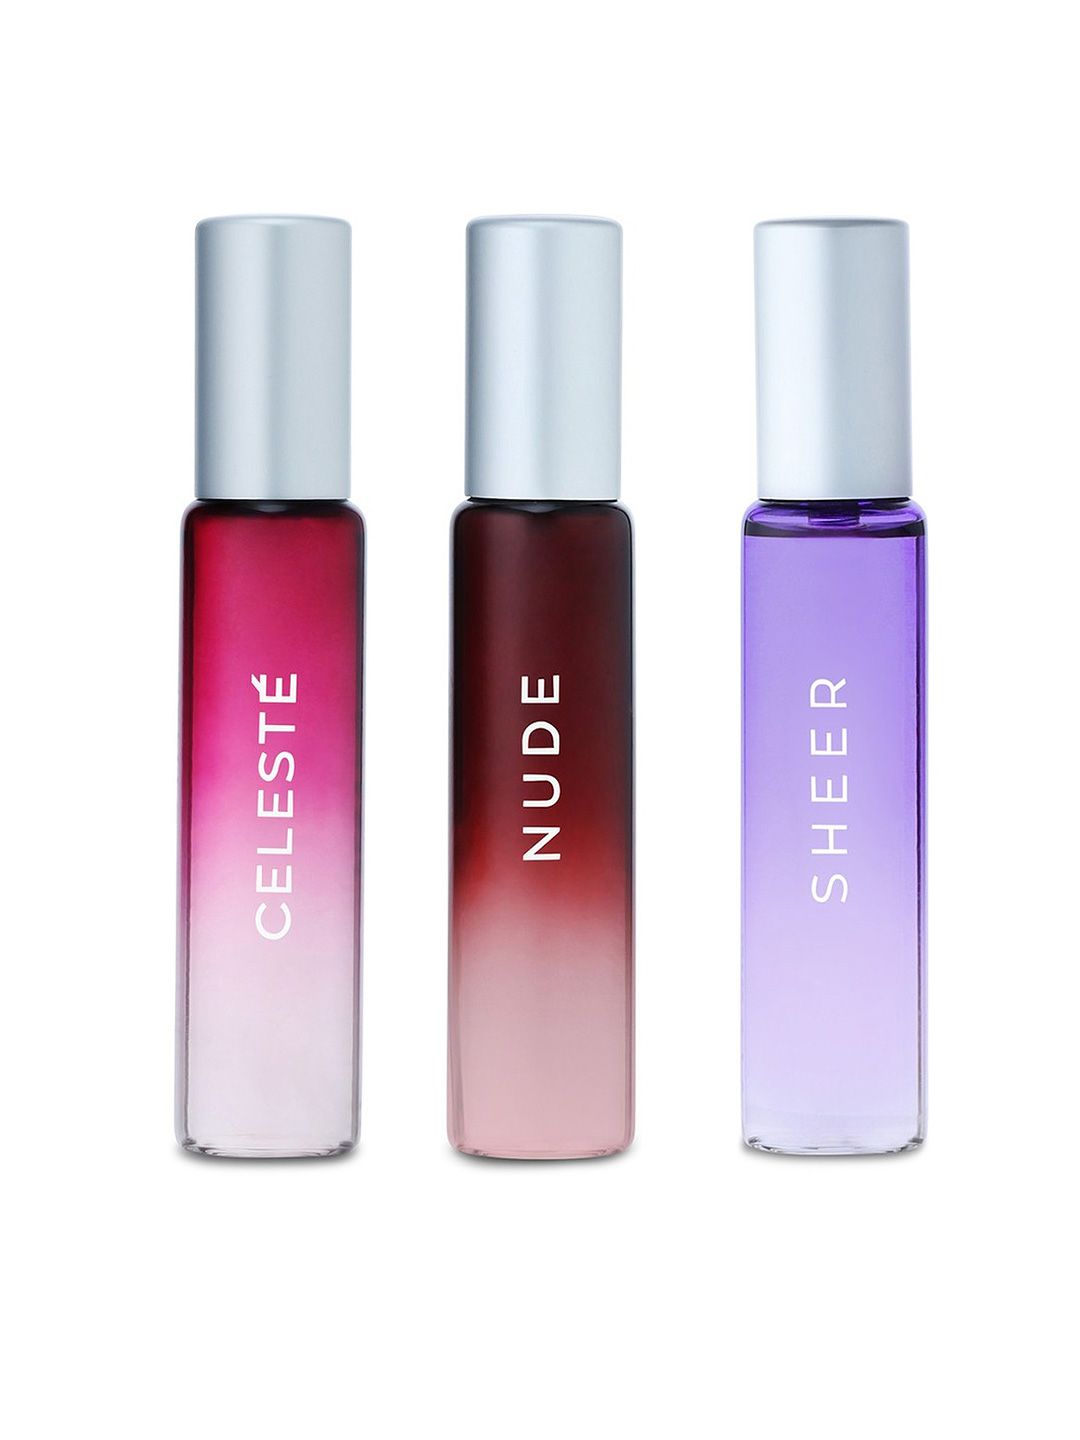 SKINN by Titan Set of 3 Eau De Parfums- Nude, Sheer & Celeste Price in India